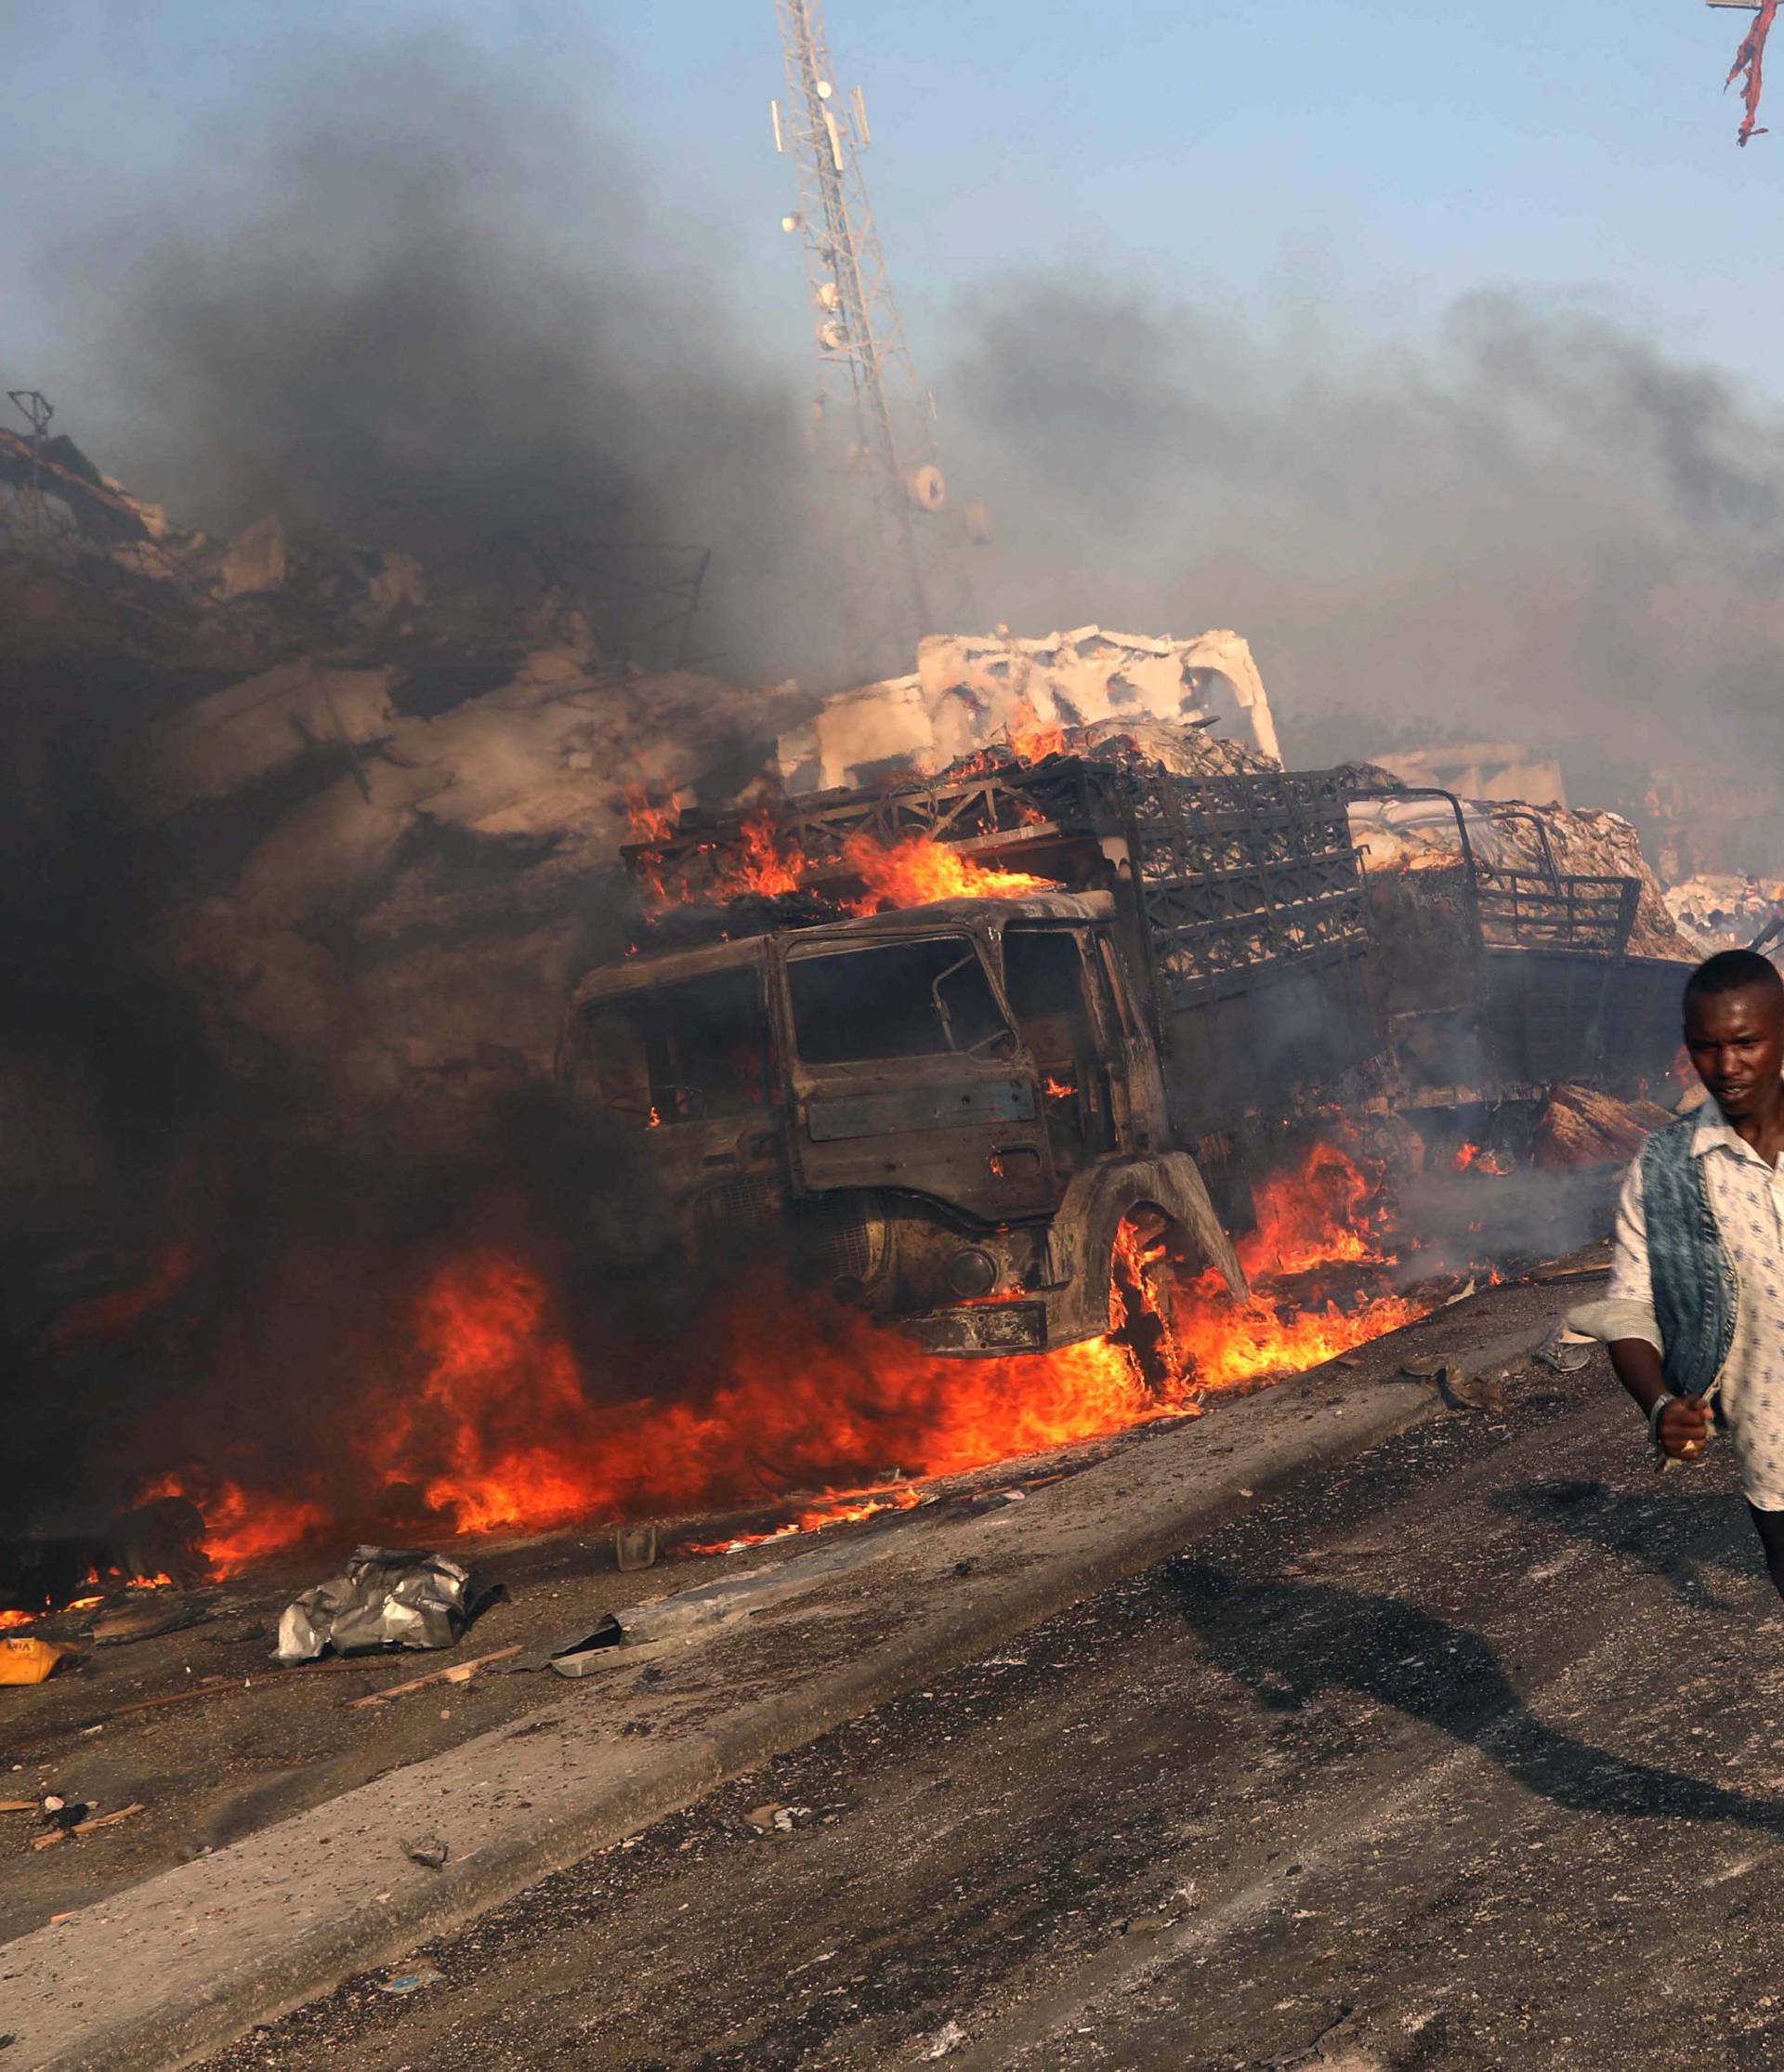 Civilians evacuate from the scene of explosion in Mogadishu